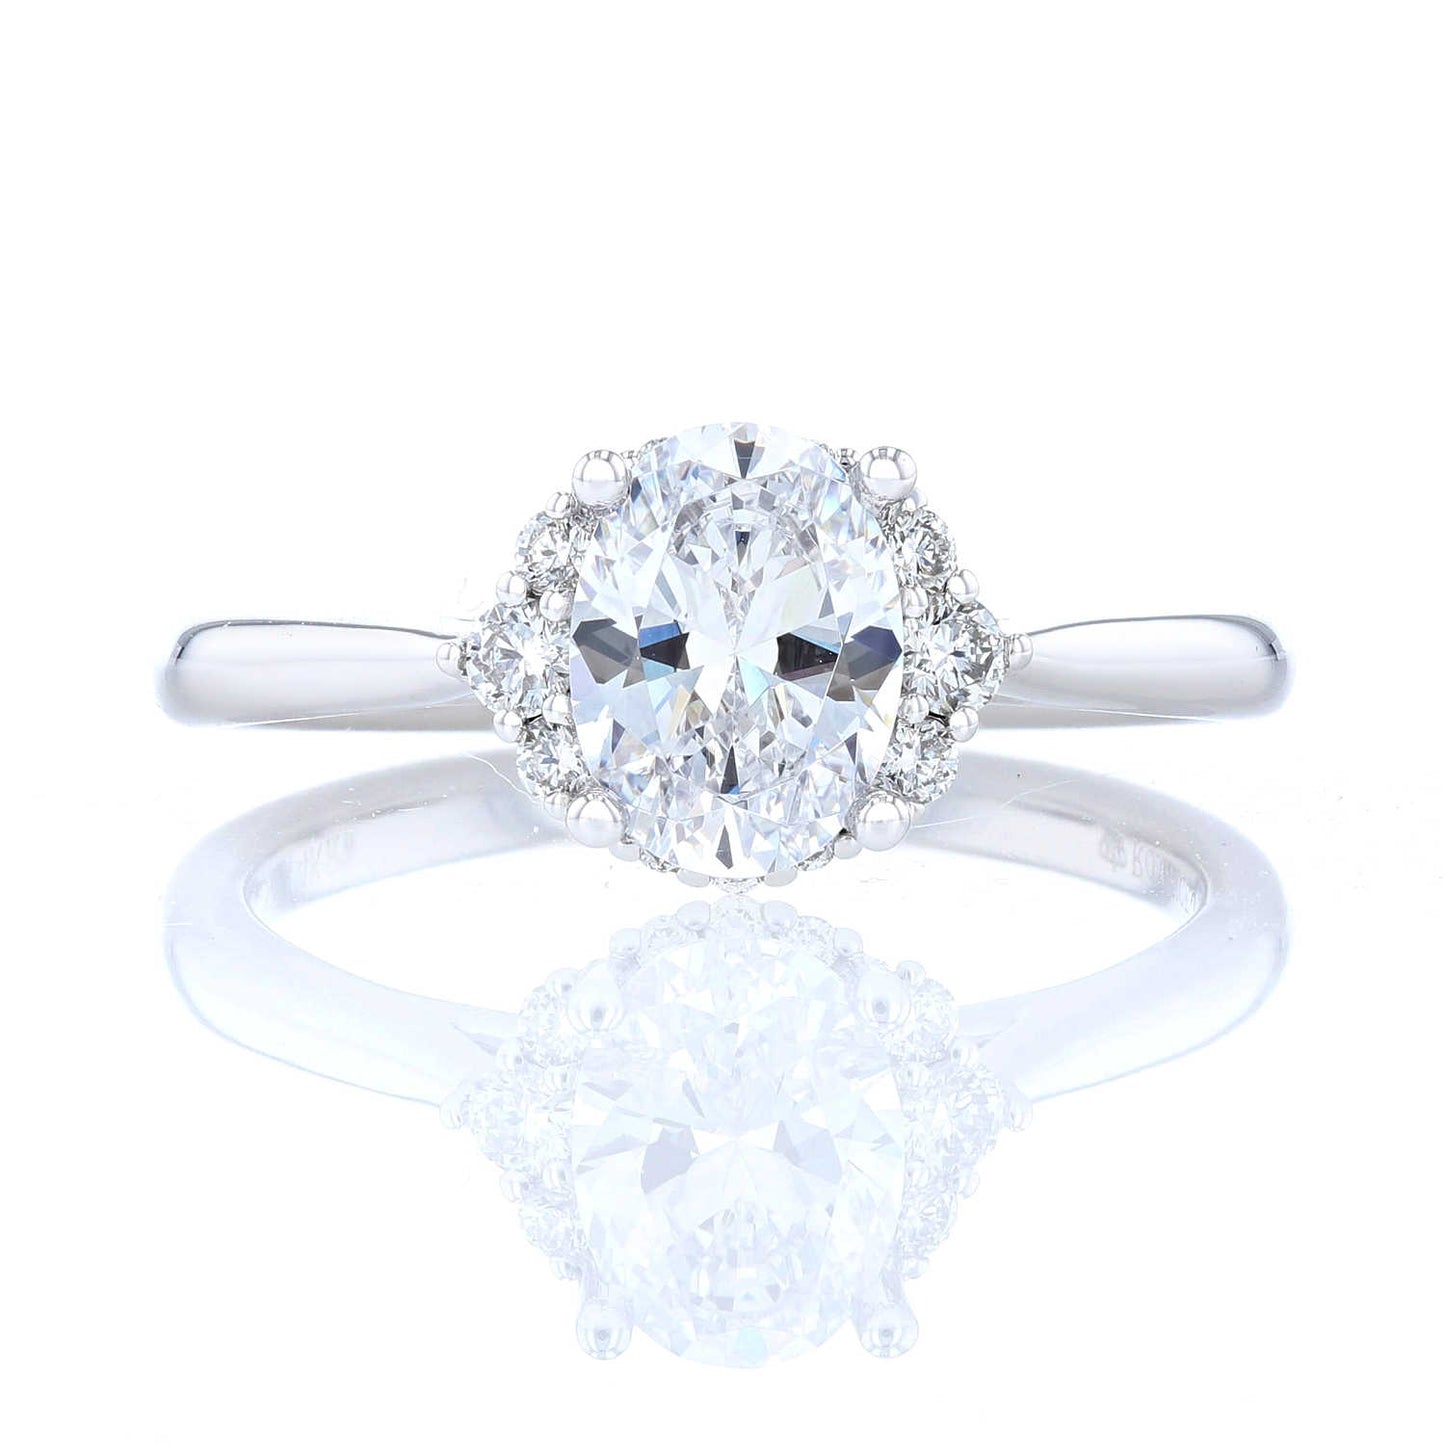 Graduated Halo Oval Diamond Engagement Ring